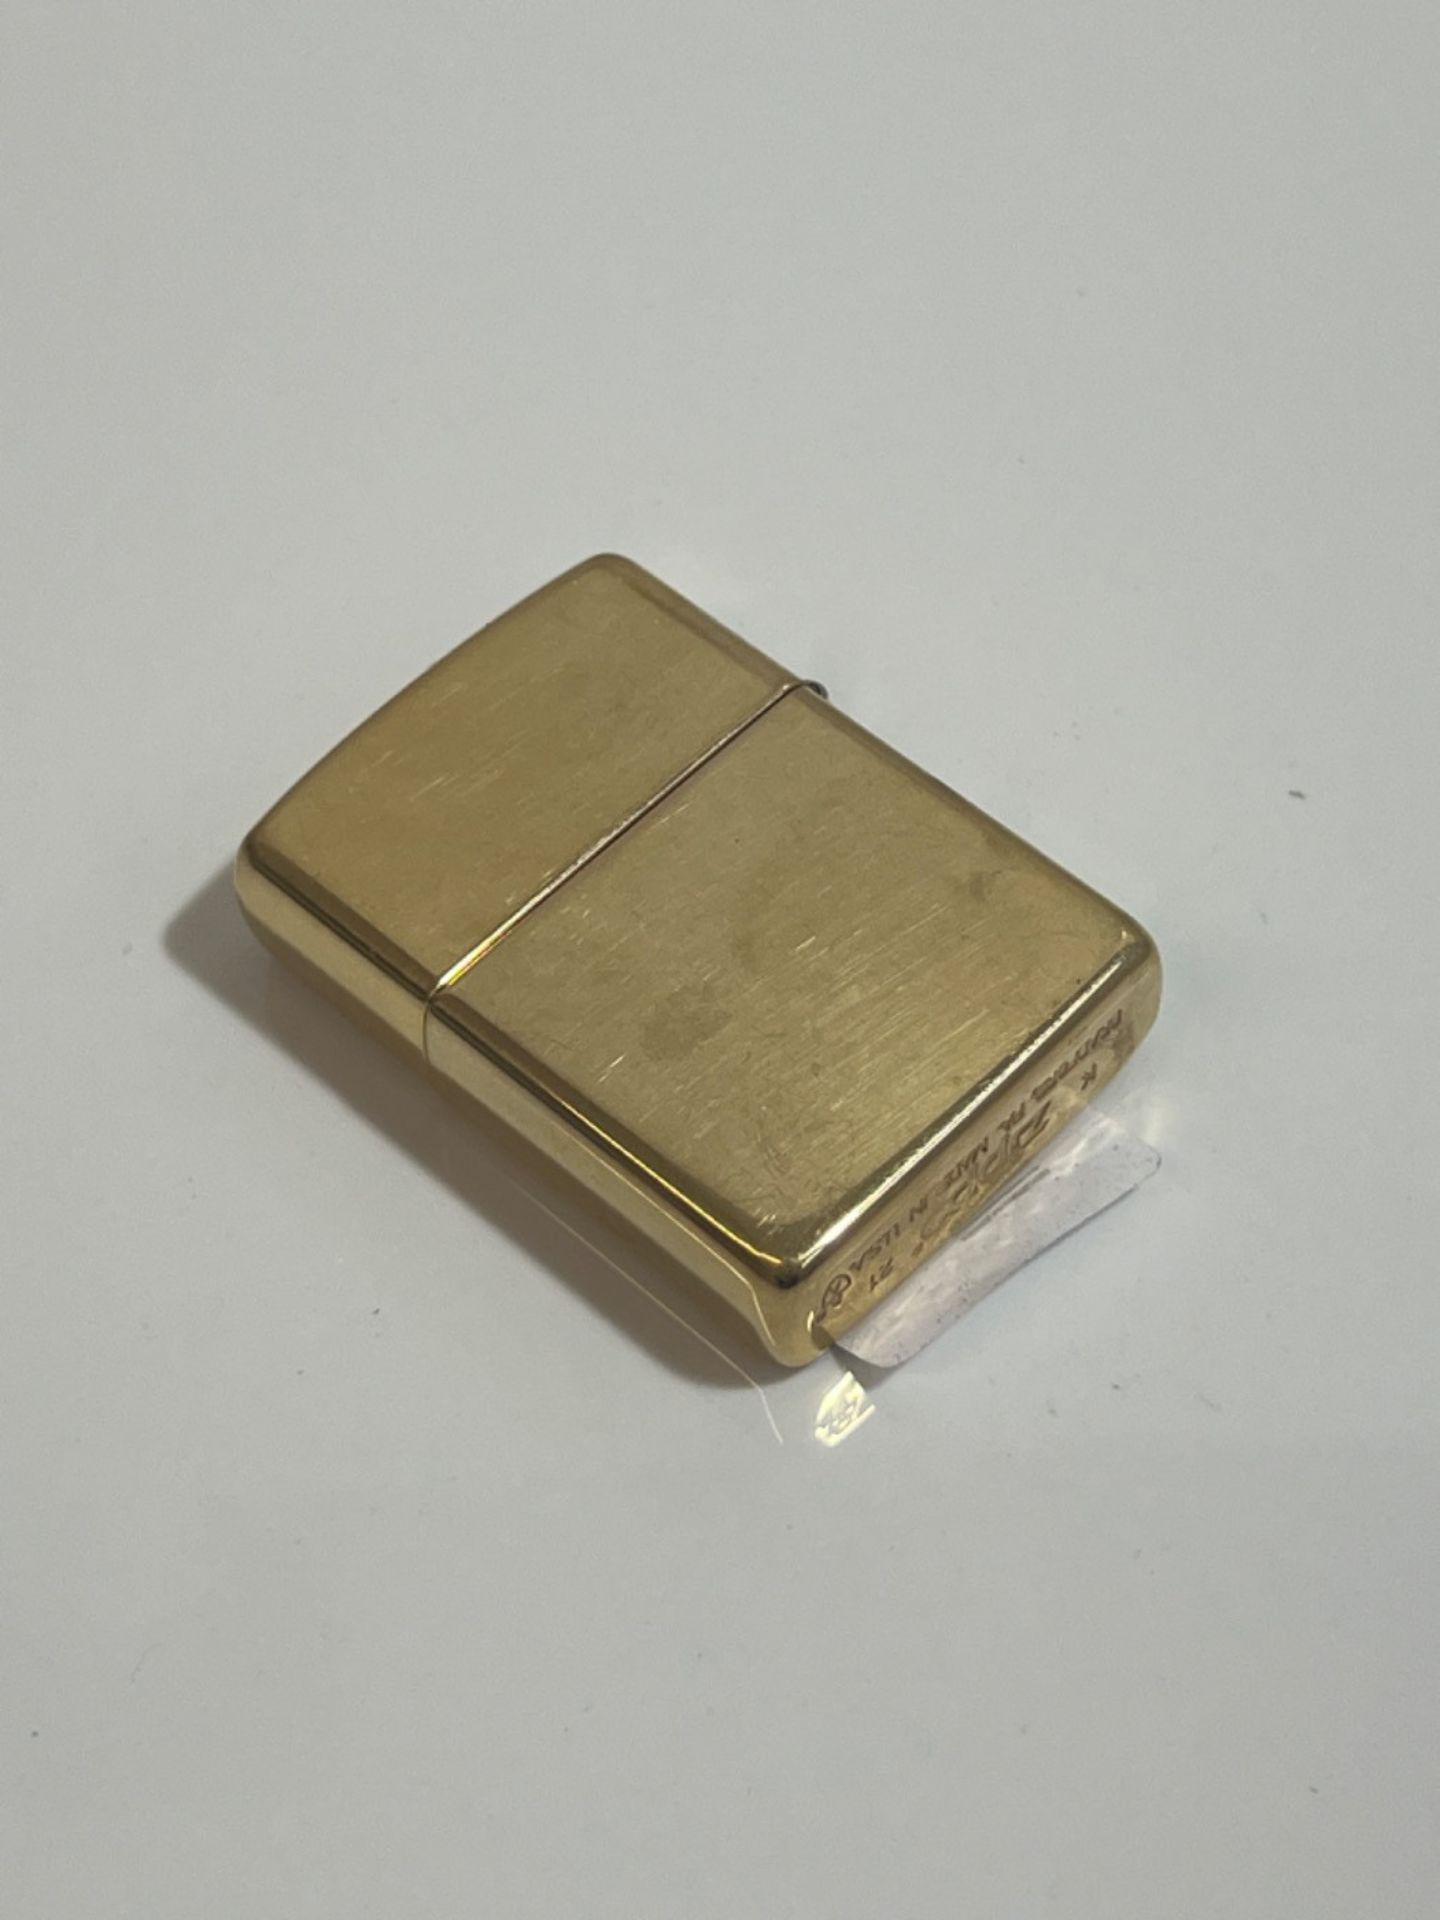 Zippo Armor Lighter - High Polish Brass,3.81 x 1.27 x 5.72 cm; 24 Grams - Image 2 of 3